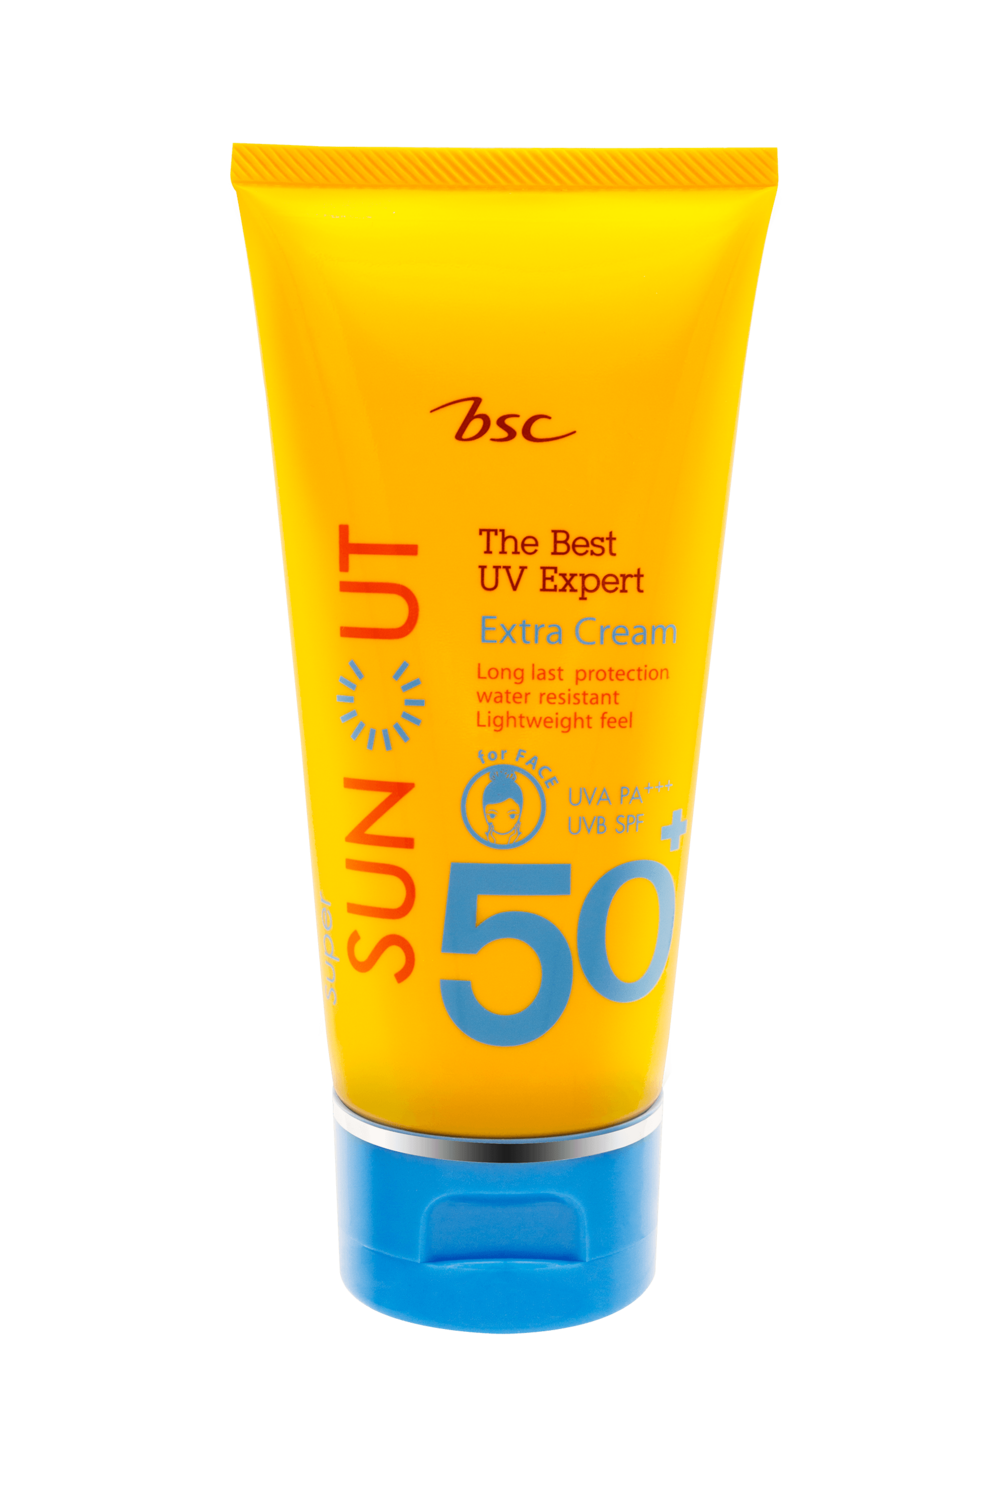 BSC SUPER SUN CUT THE BEST UV EXPERT EXTRA CREAM SPF50+ PA+++